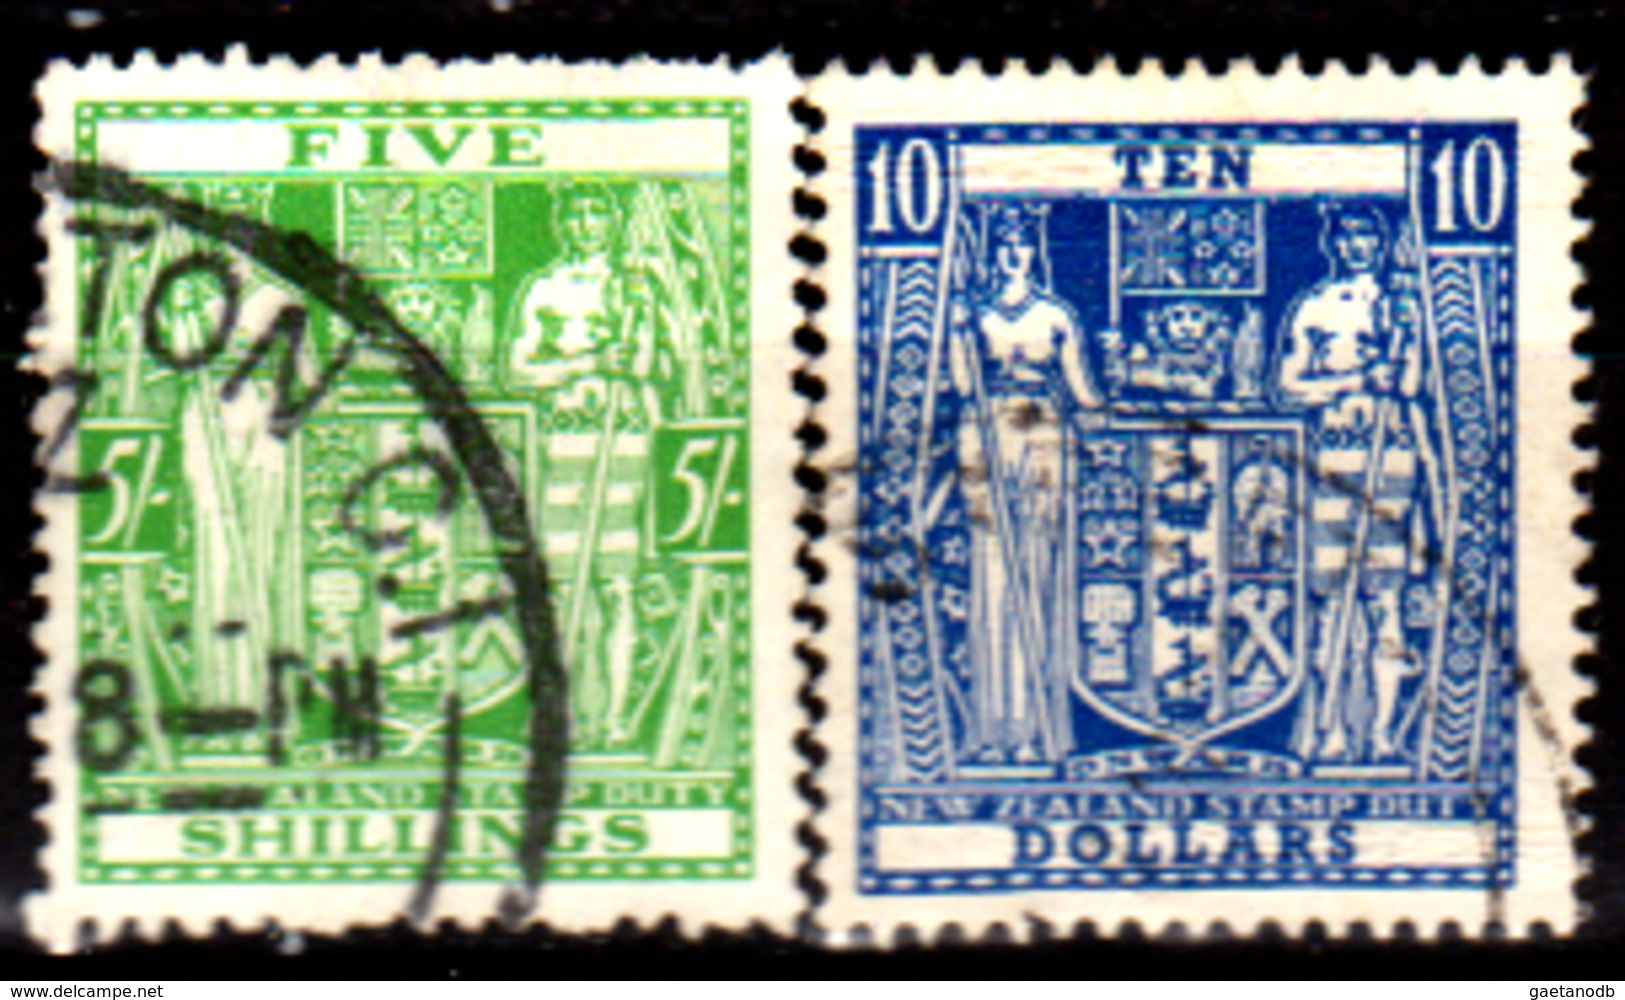 Nuova-Zelanda-0086 - Fiscali Postali 1931-86 (o) Used - Senza Difetti Occulti. - Postal Fiscal Stamps